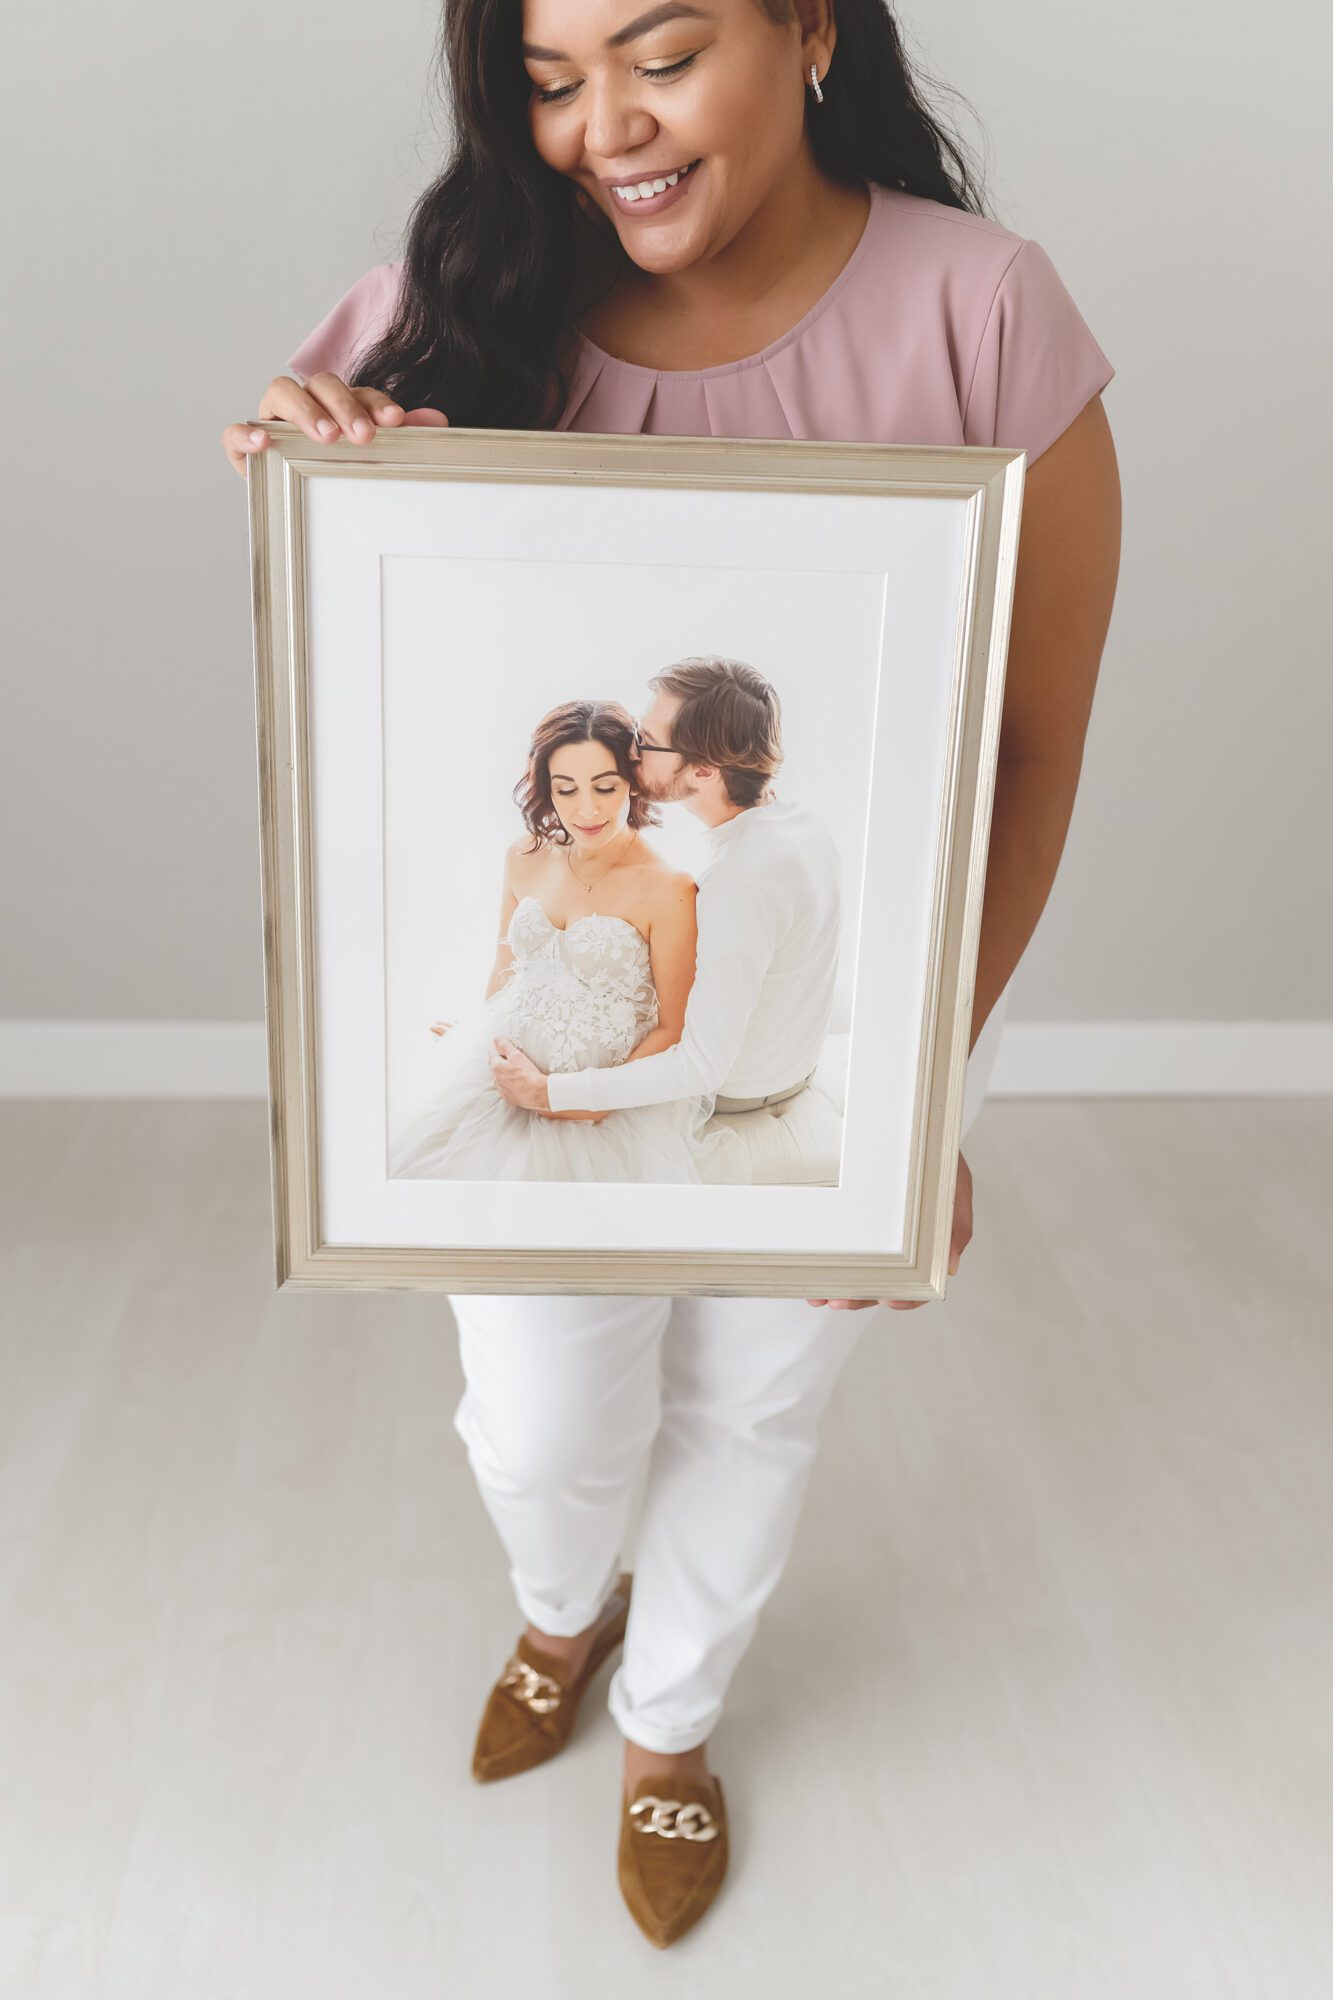 Scottsdale maternity photographer luxury service custom framing